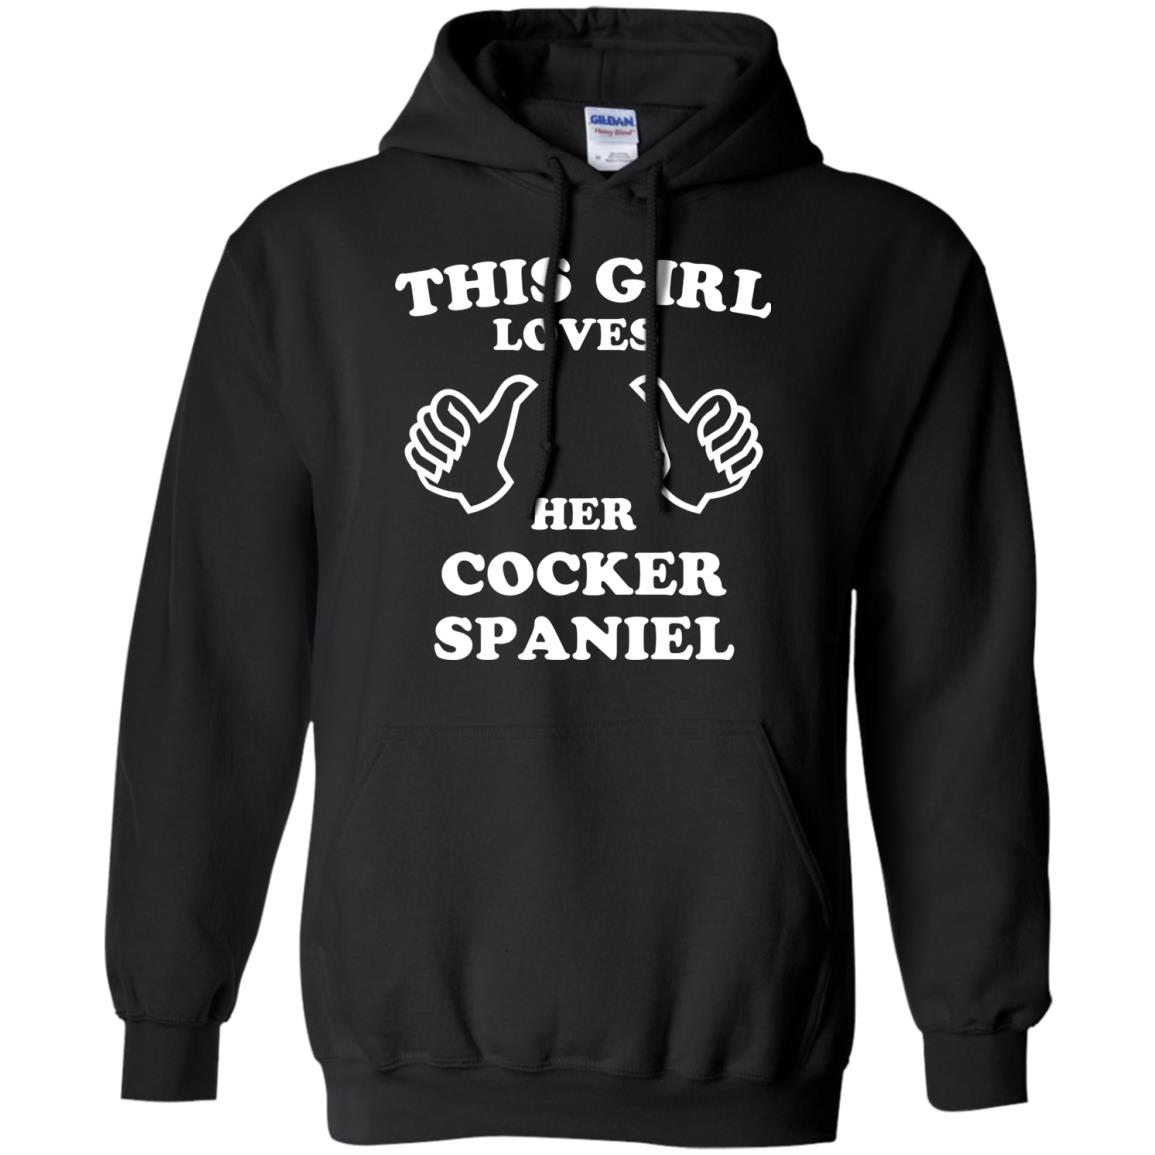 This Girl Loves Her Cocker Spaniel Hoodie Black